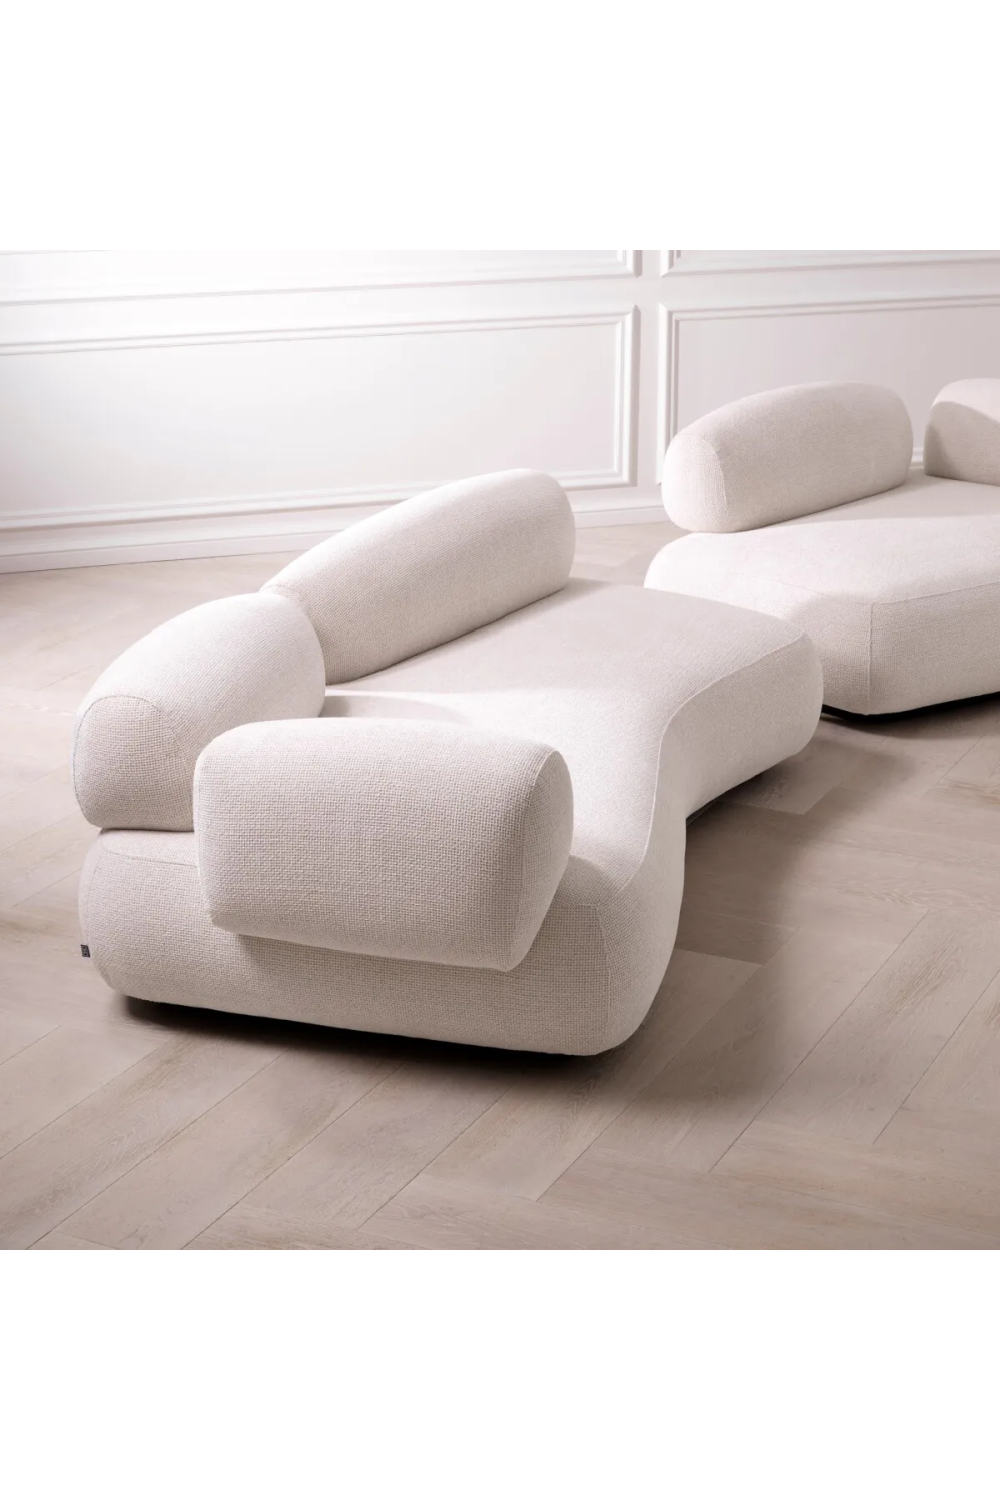 Off-White Modern Sofa | Eichholtz Cabrera | Oroa.com